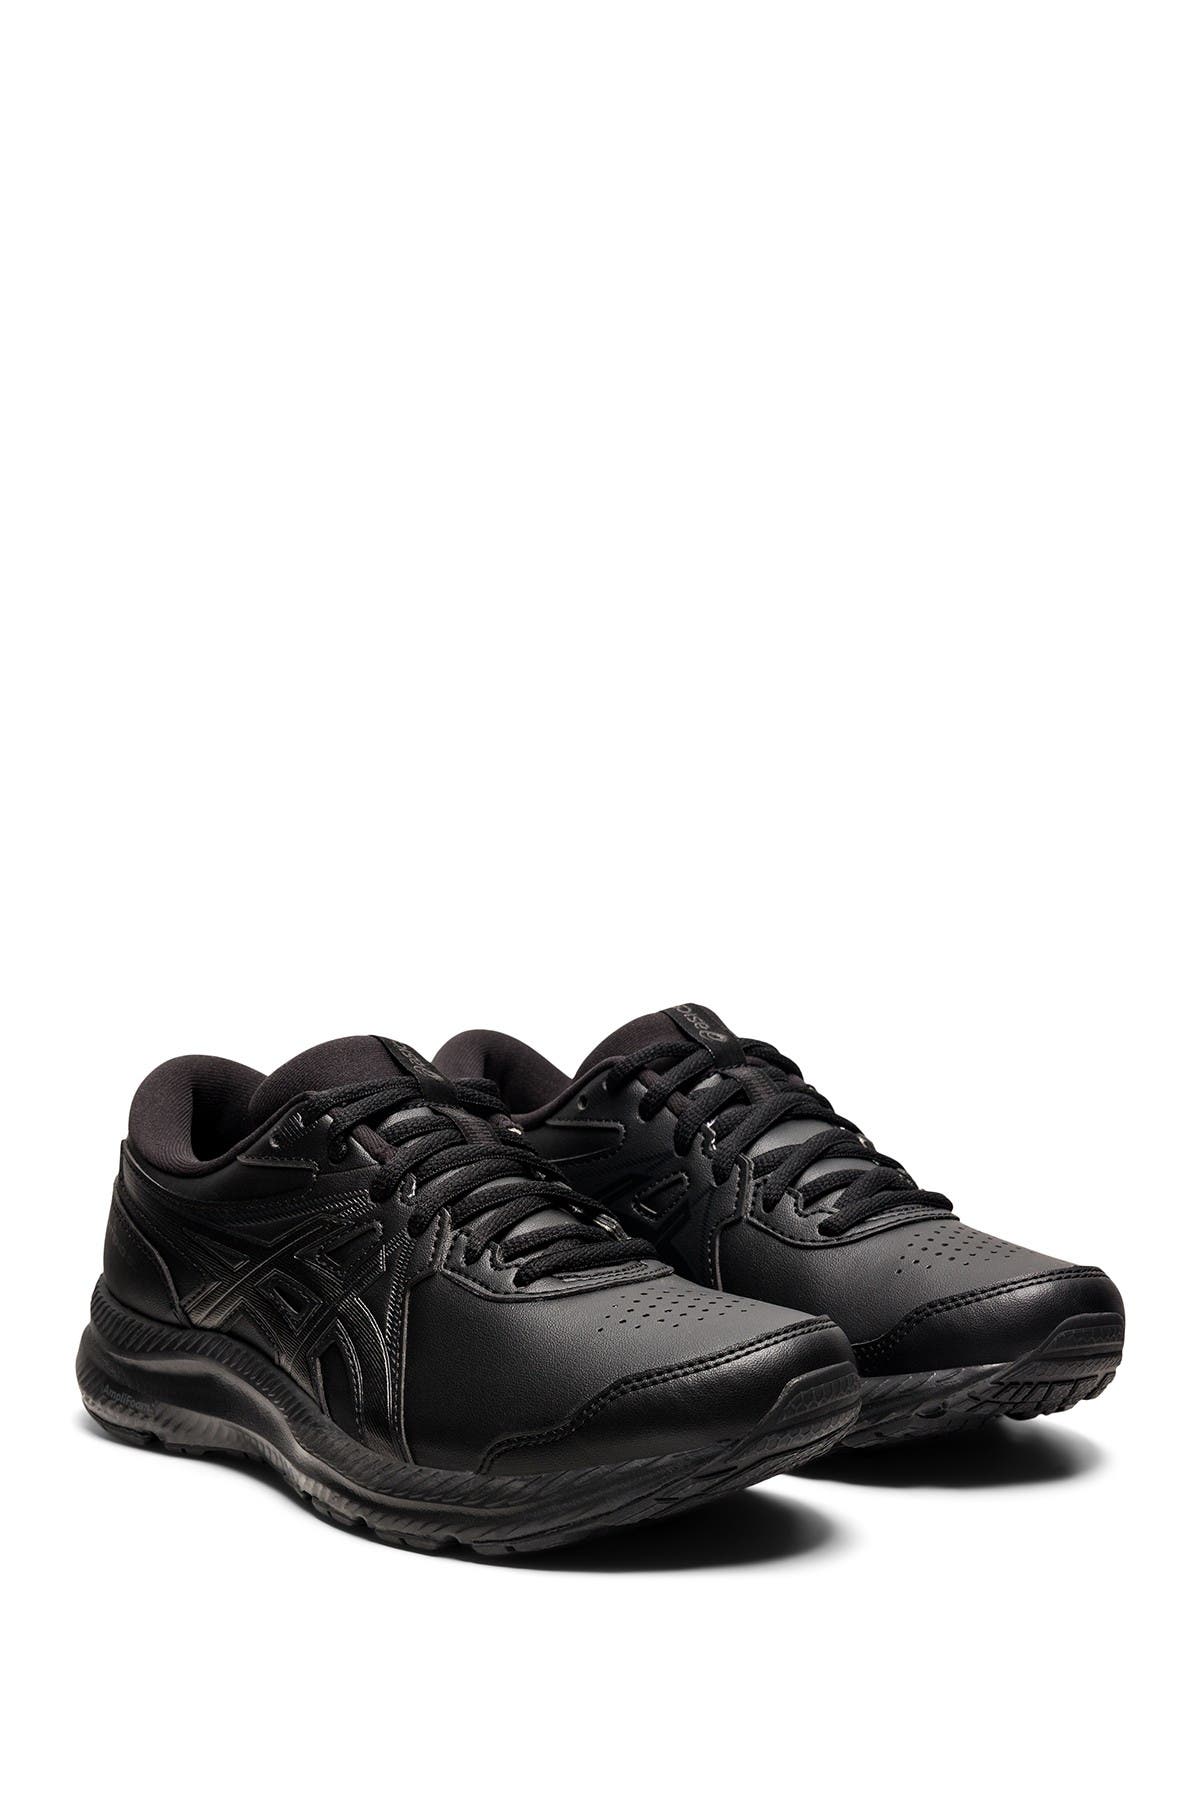 Asics Gel-contend Walker Shoe In Black/black